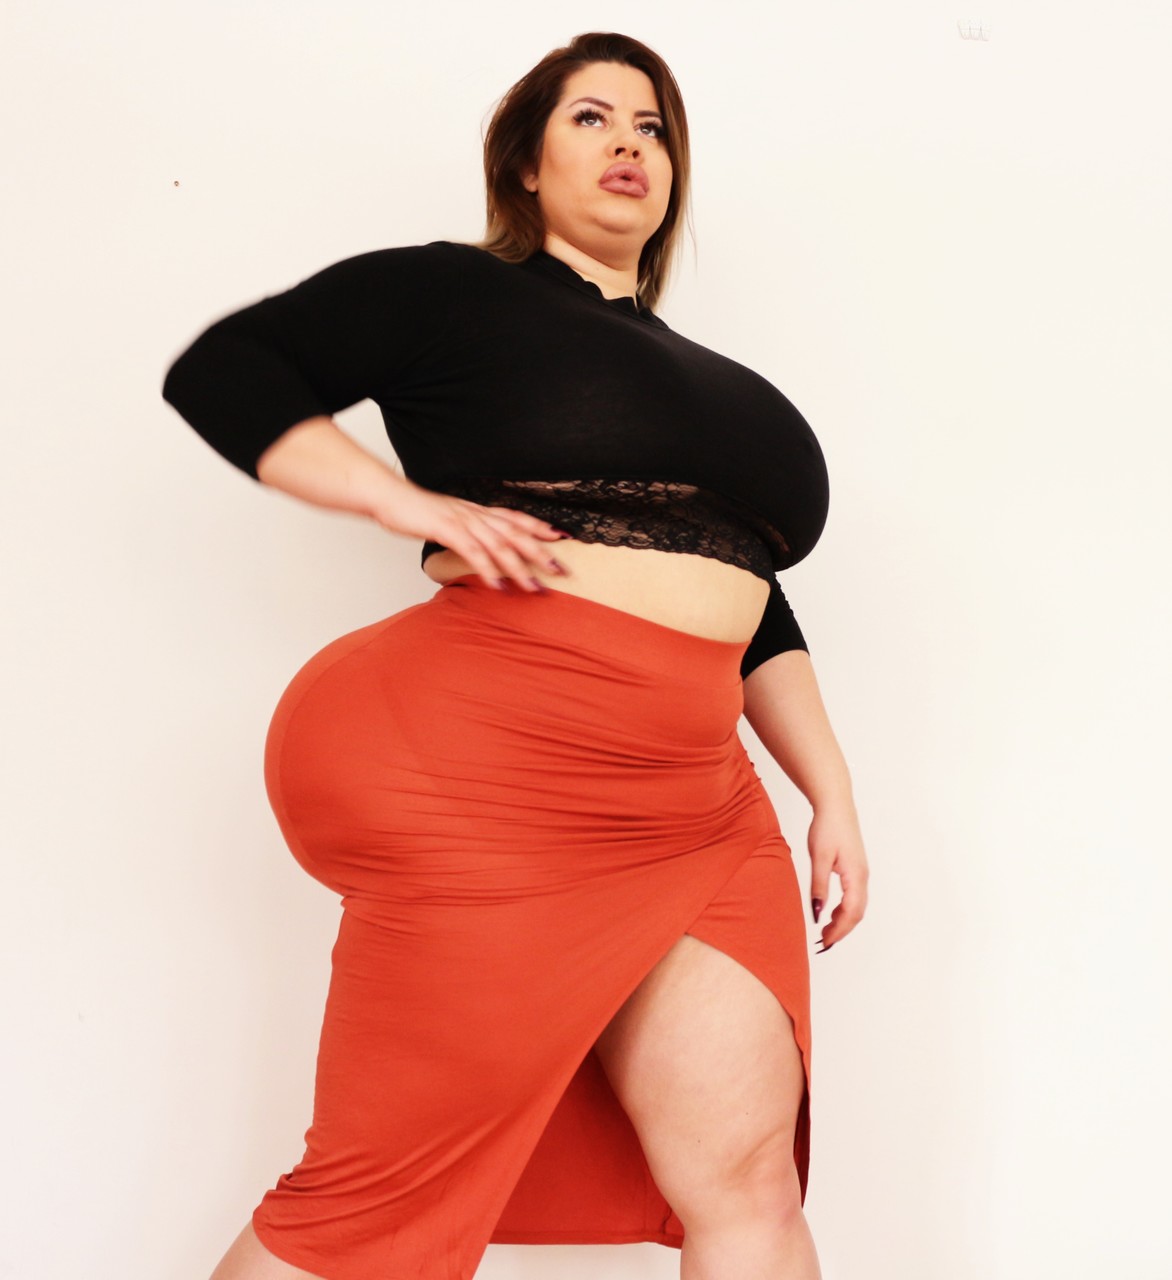 Stunning MILF fatty Natasha Crown flaunting her very big ass in a tight skirt foto porno #423816654 | Natasha Crown Pics, Natasha Crown, BBW, porno ponsel